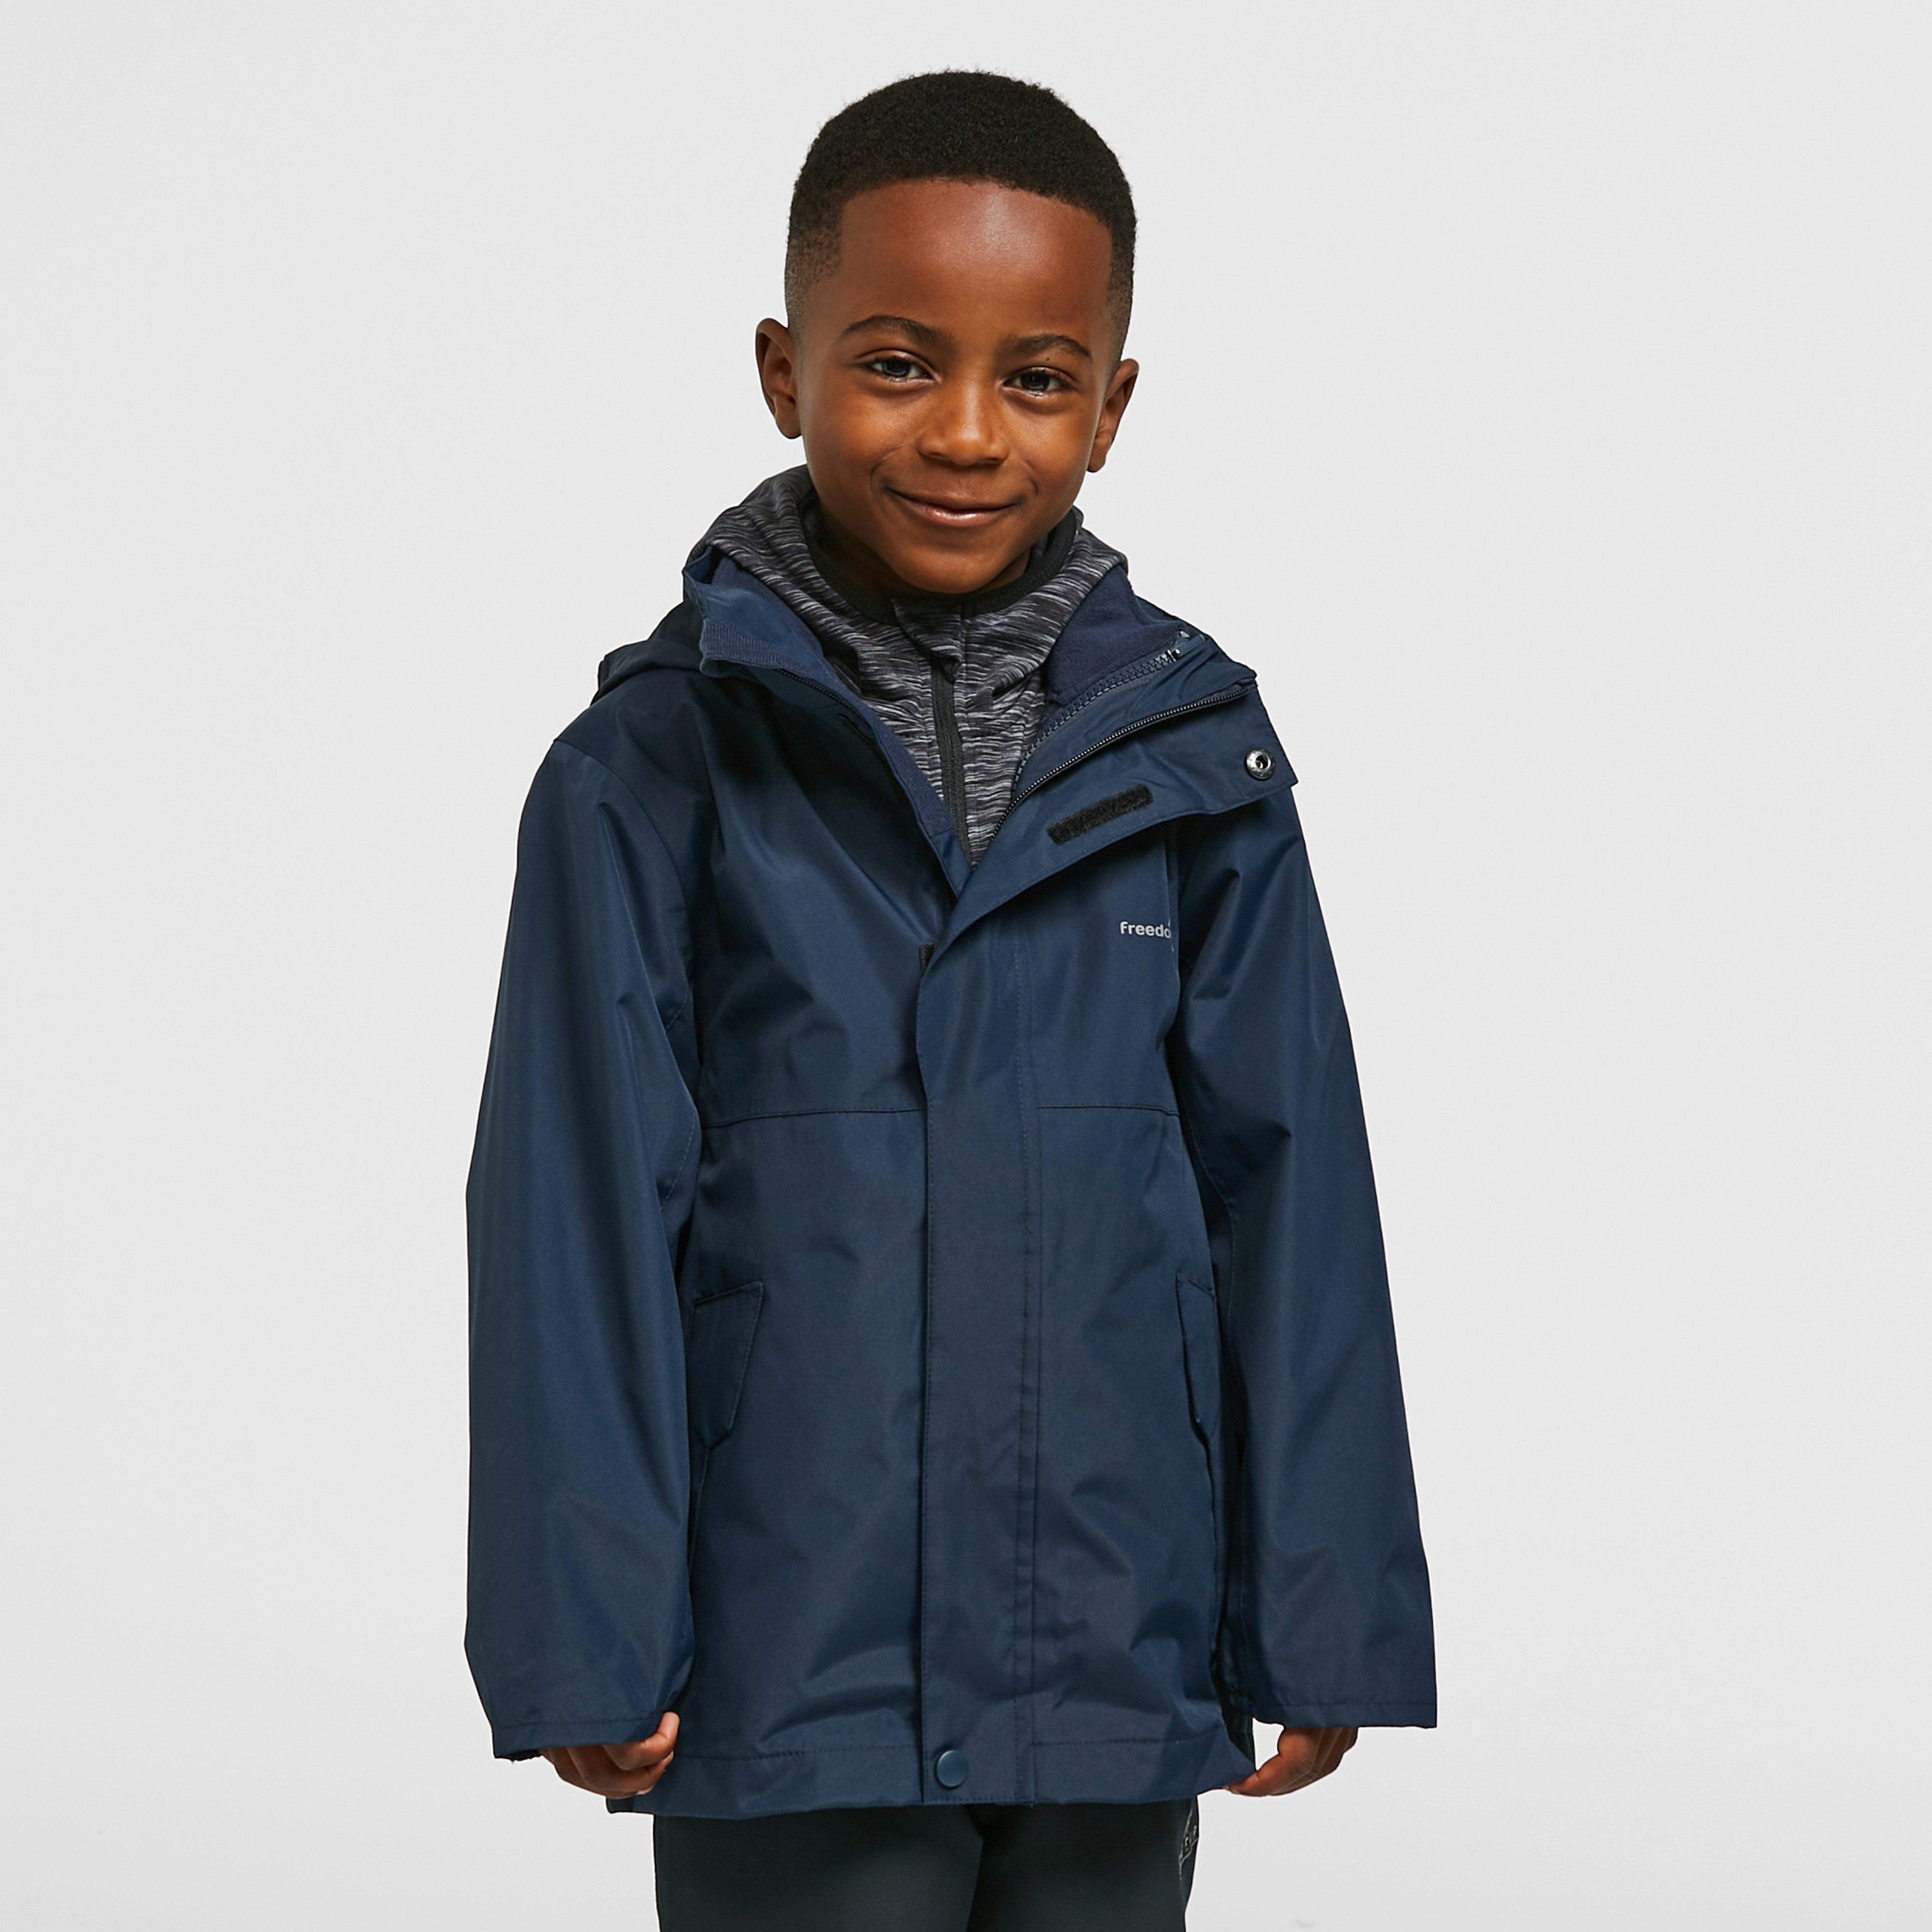 Freedom Trail Kids Versatile 3-in-1 Jacket (13-16 Years) - Navy/jacket  Navy/jacket